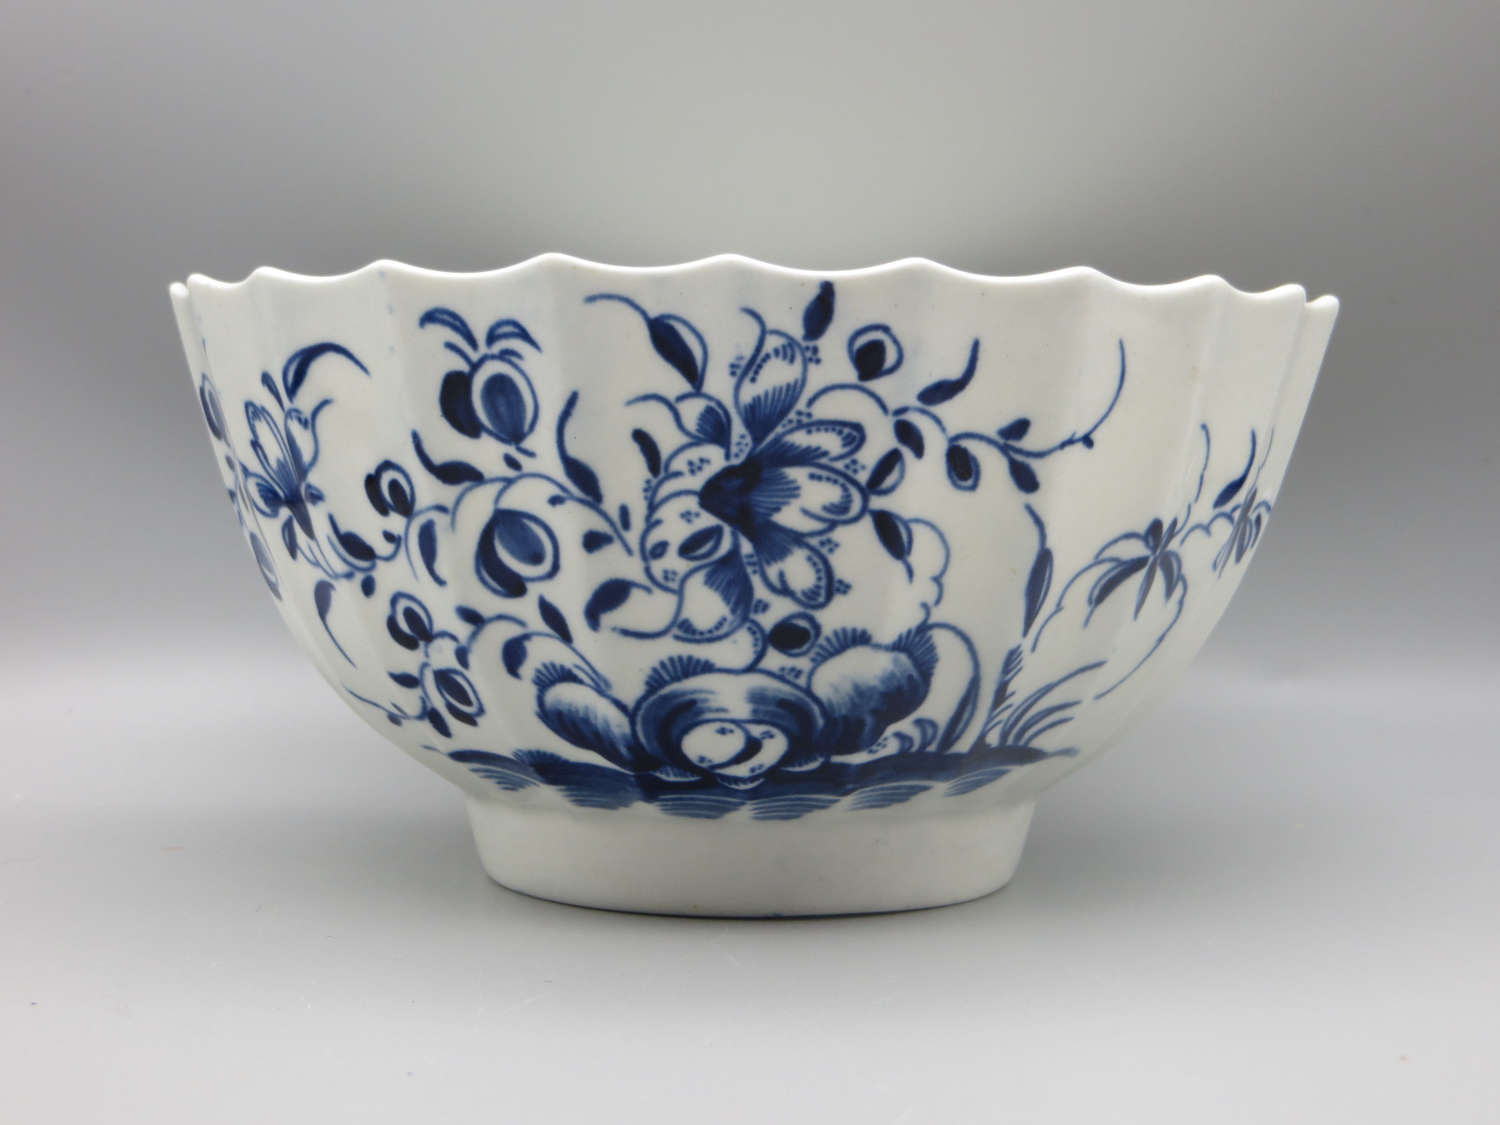 18th century Worcester porcelain slop bowl